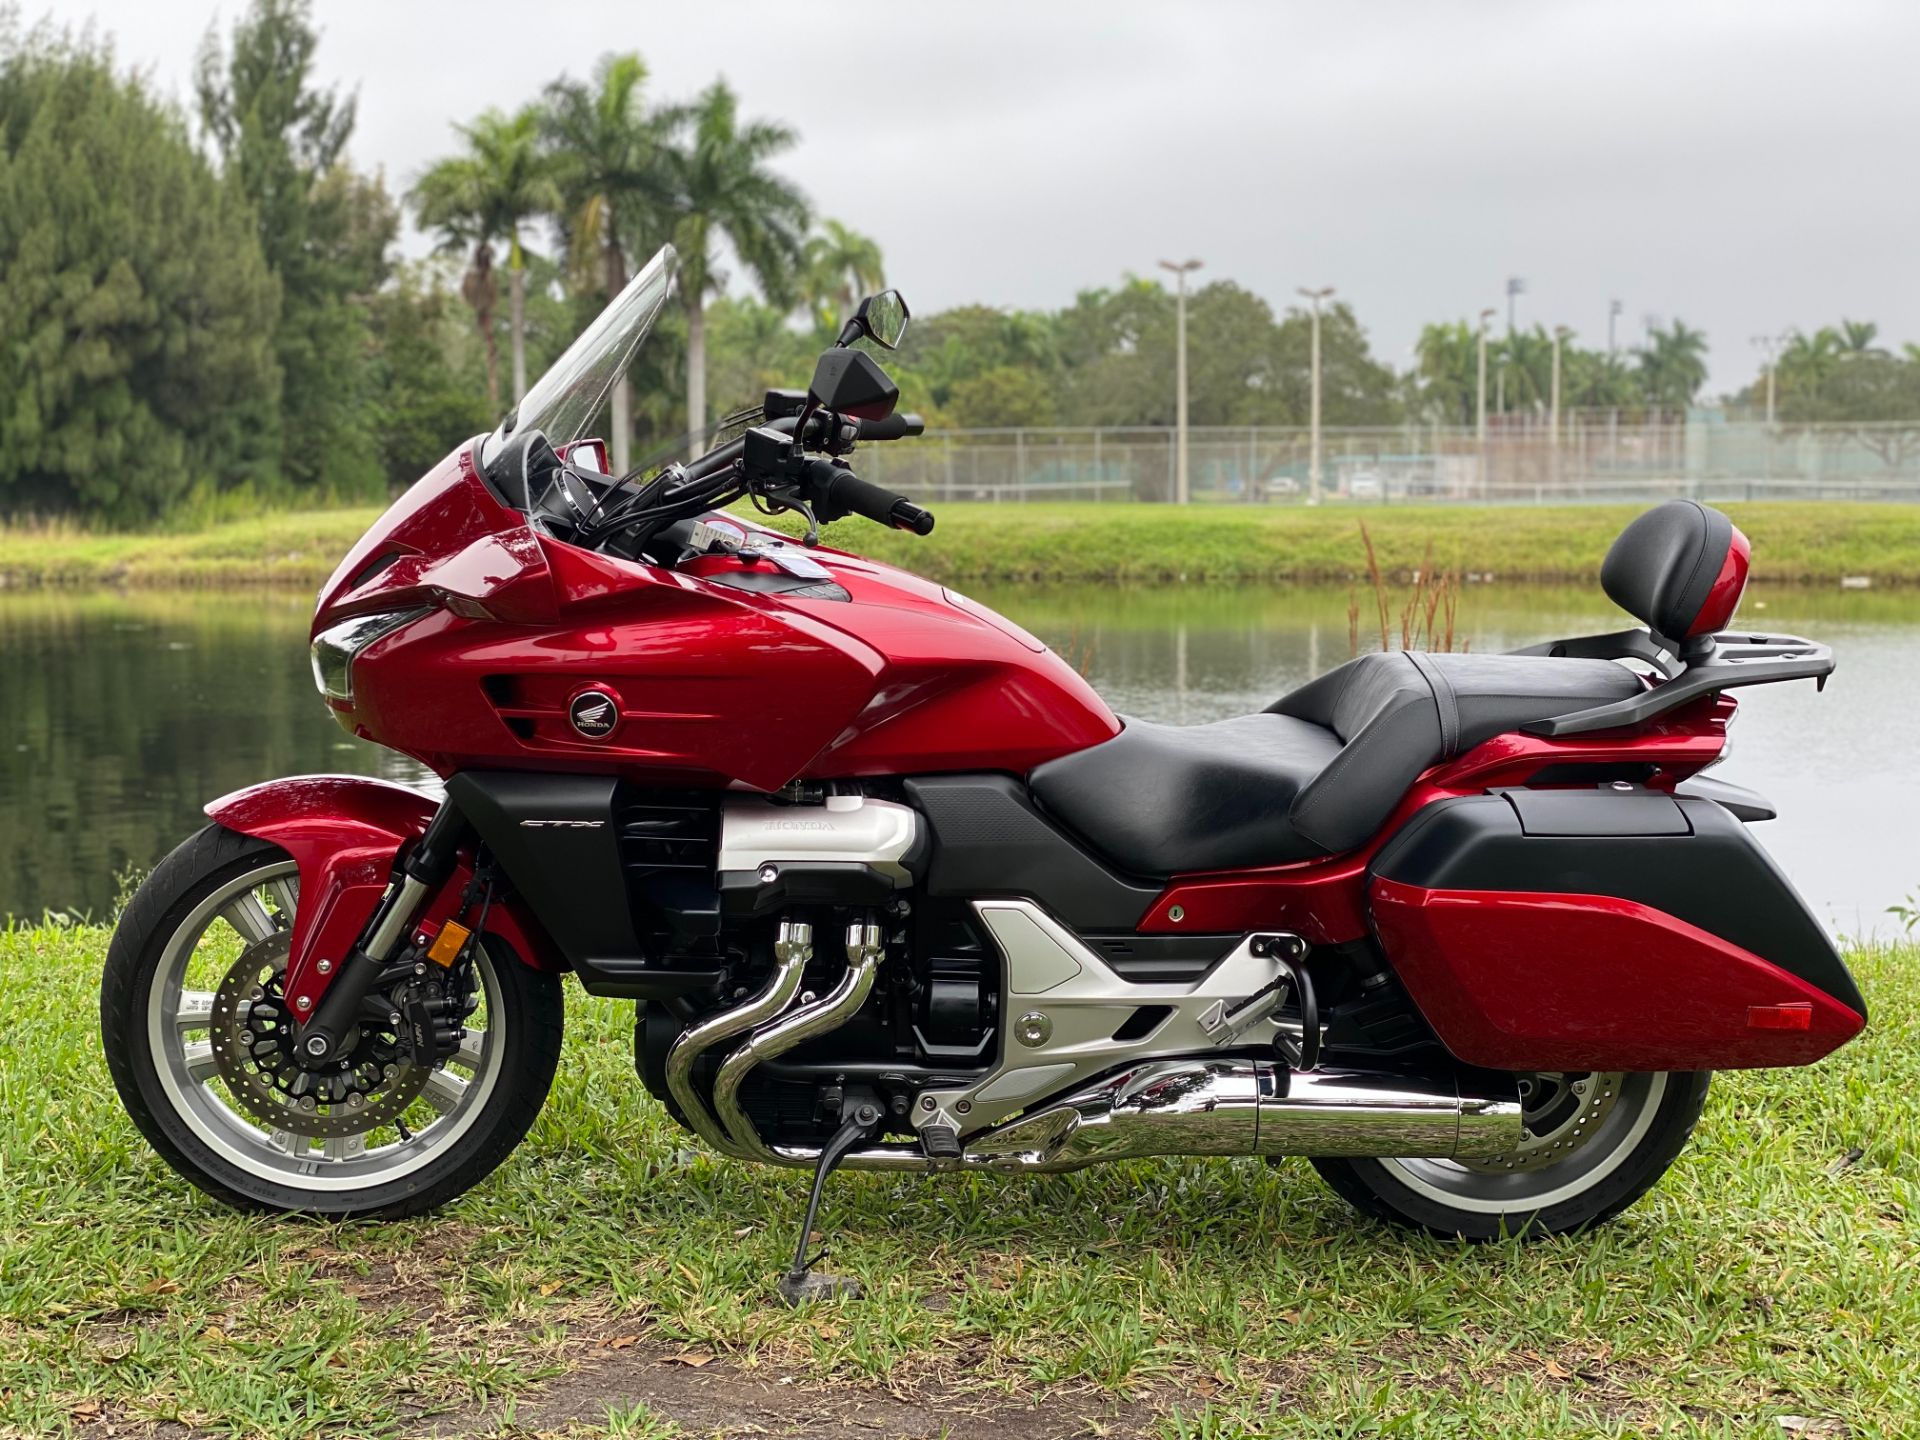 2014 Honda CTX®1300 in North Miami Beach, Florida - Photo 19